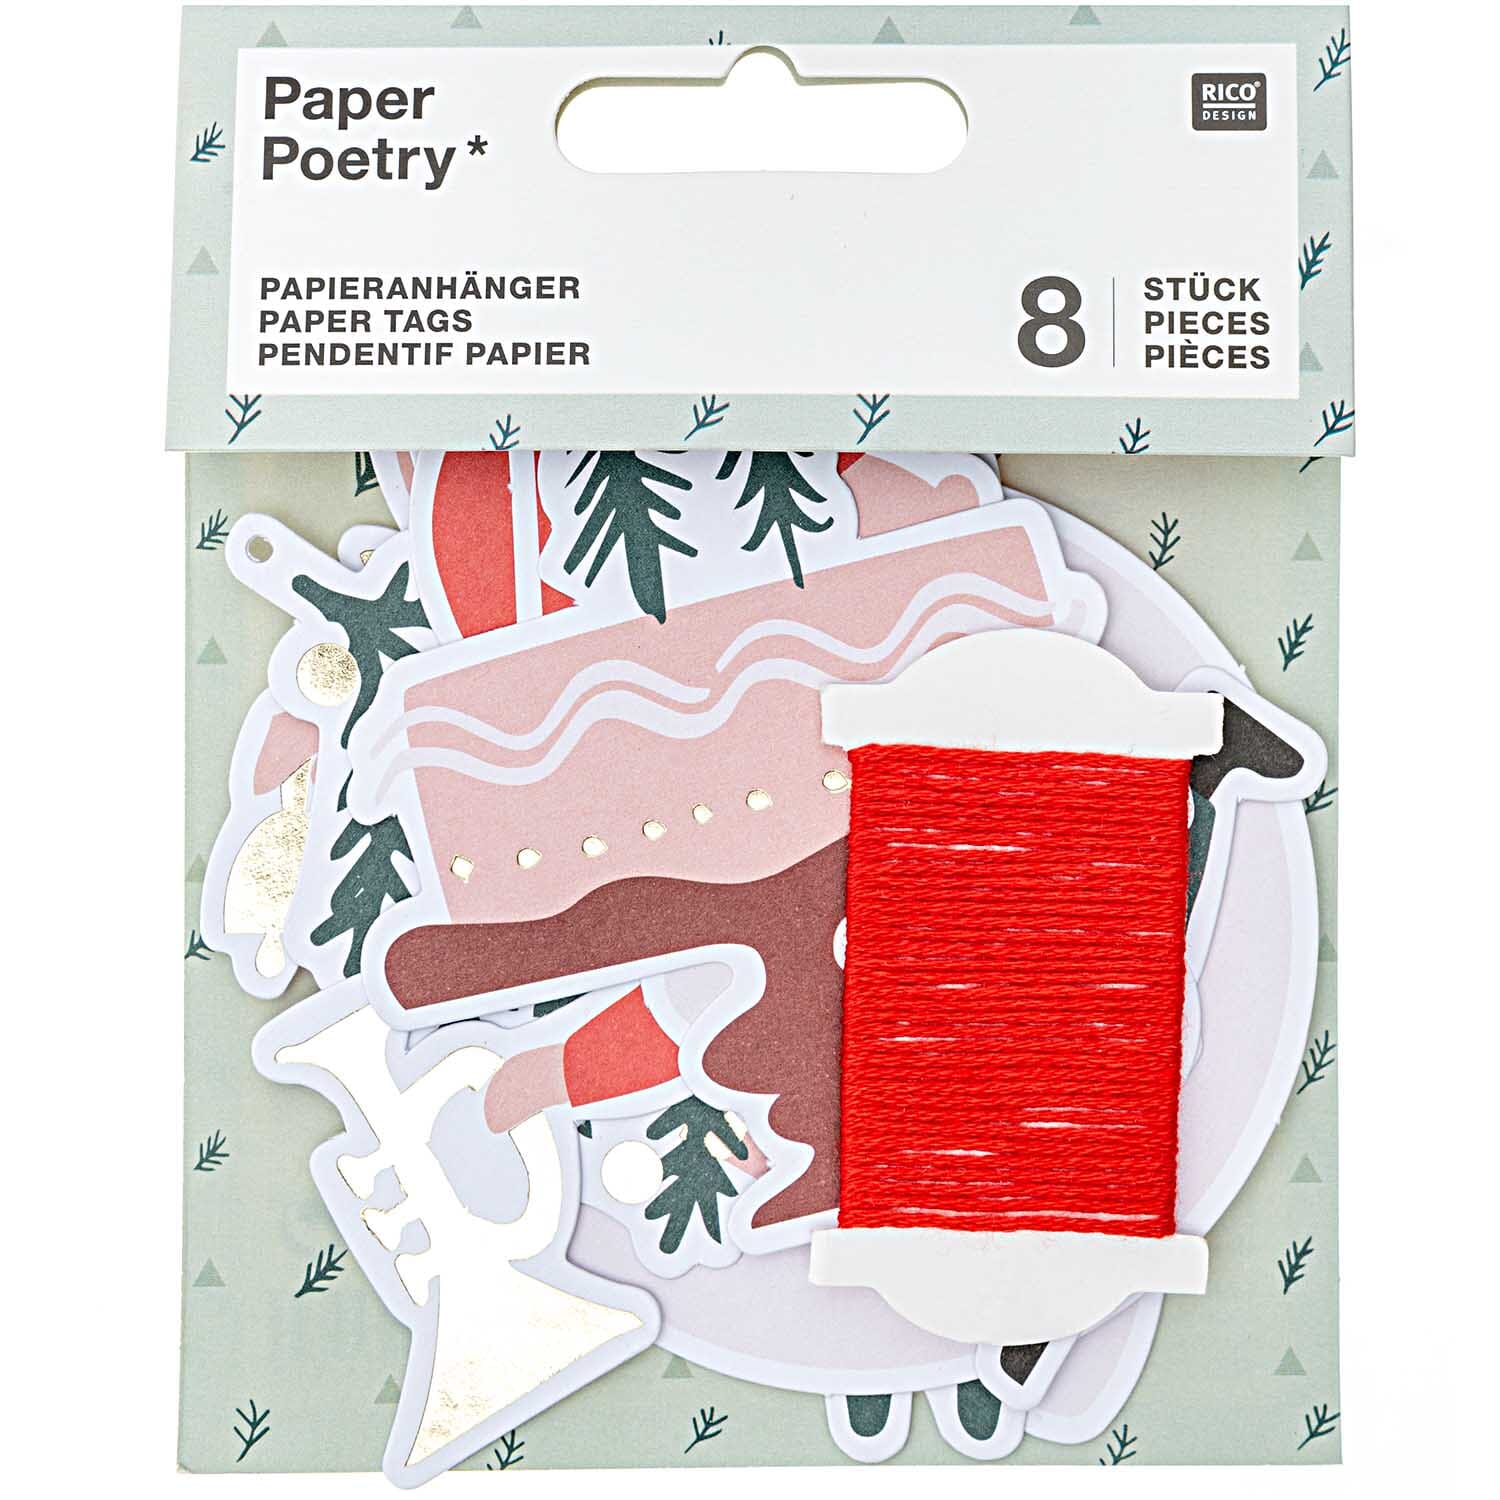 Papieranhänger Weihnachten "Classic" Papieranhänger Rico Design 